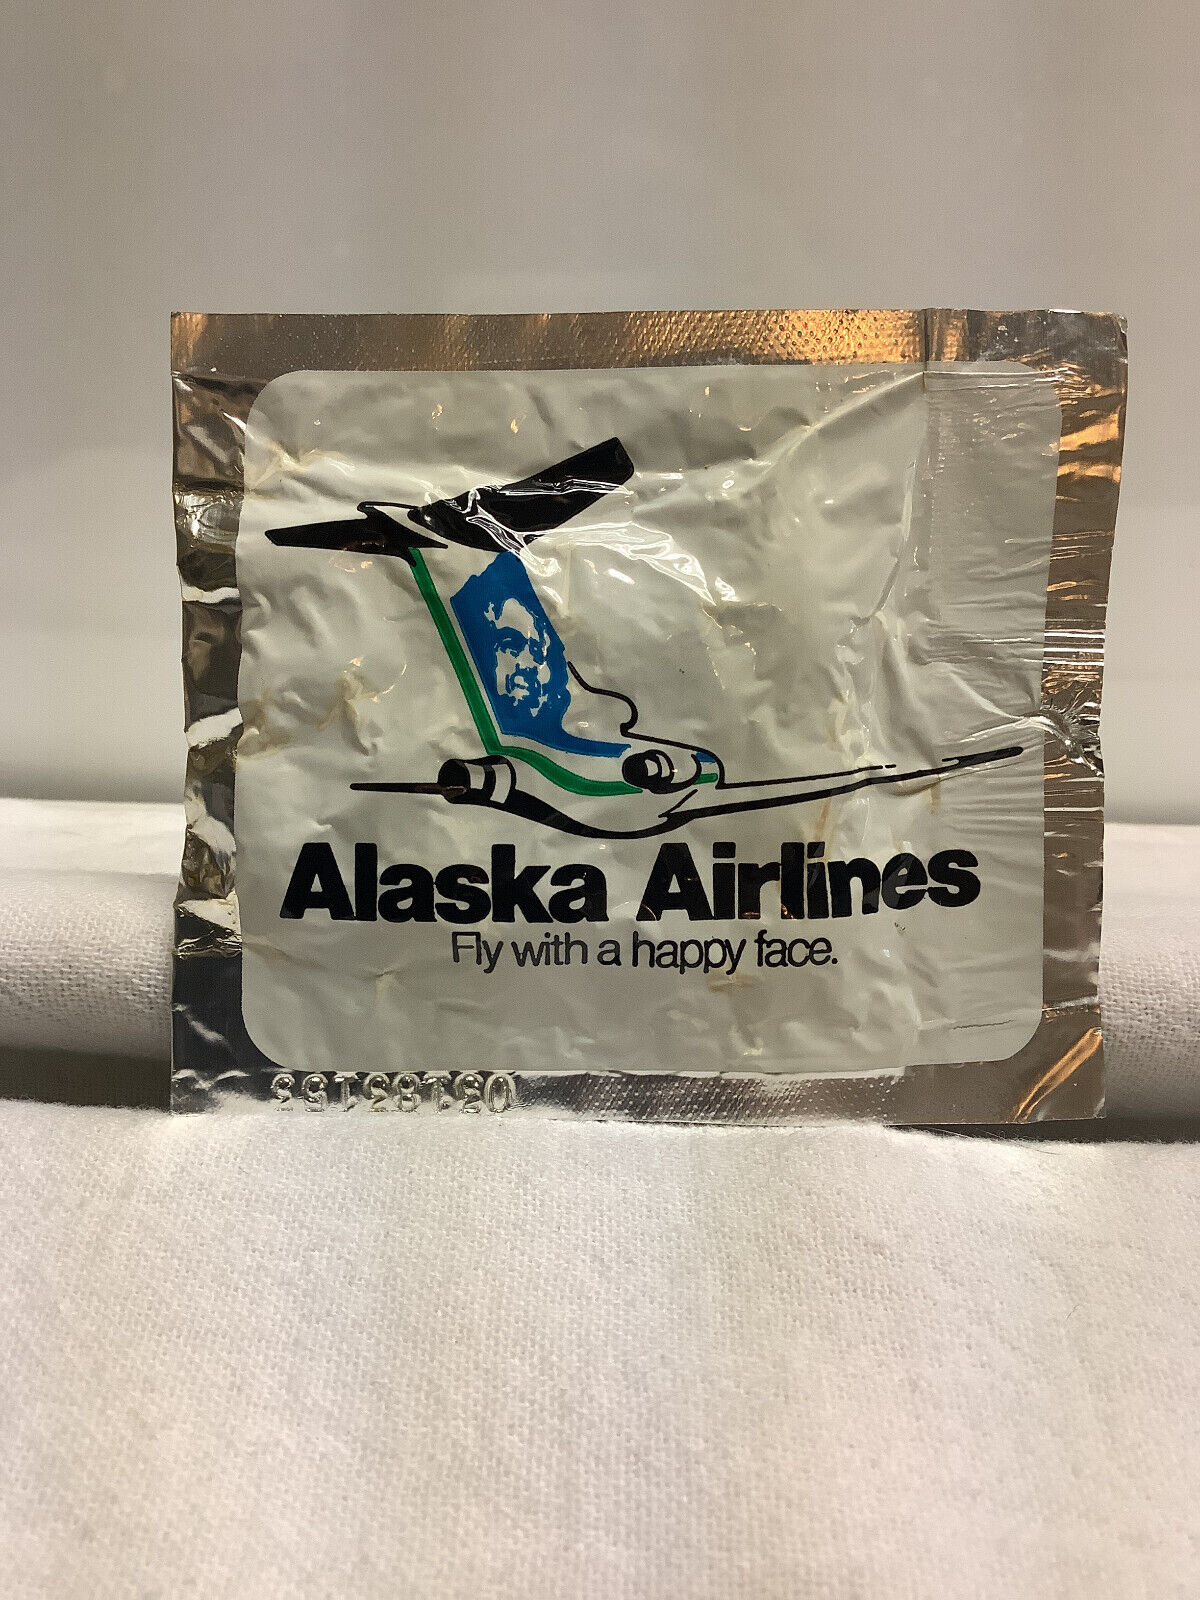 Vintage Rare Alaska Airlines package of Almonds unopened